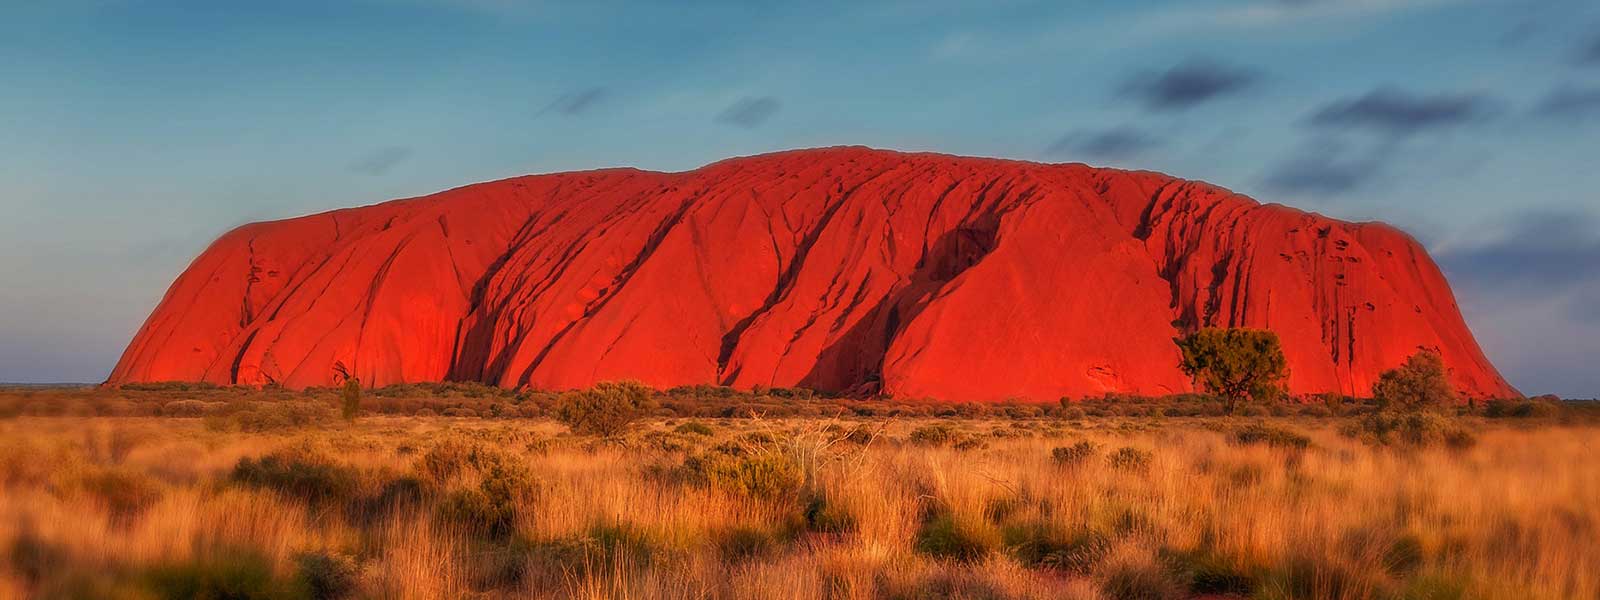 De beroemde Uluru rots in Australie